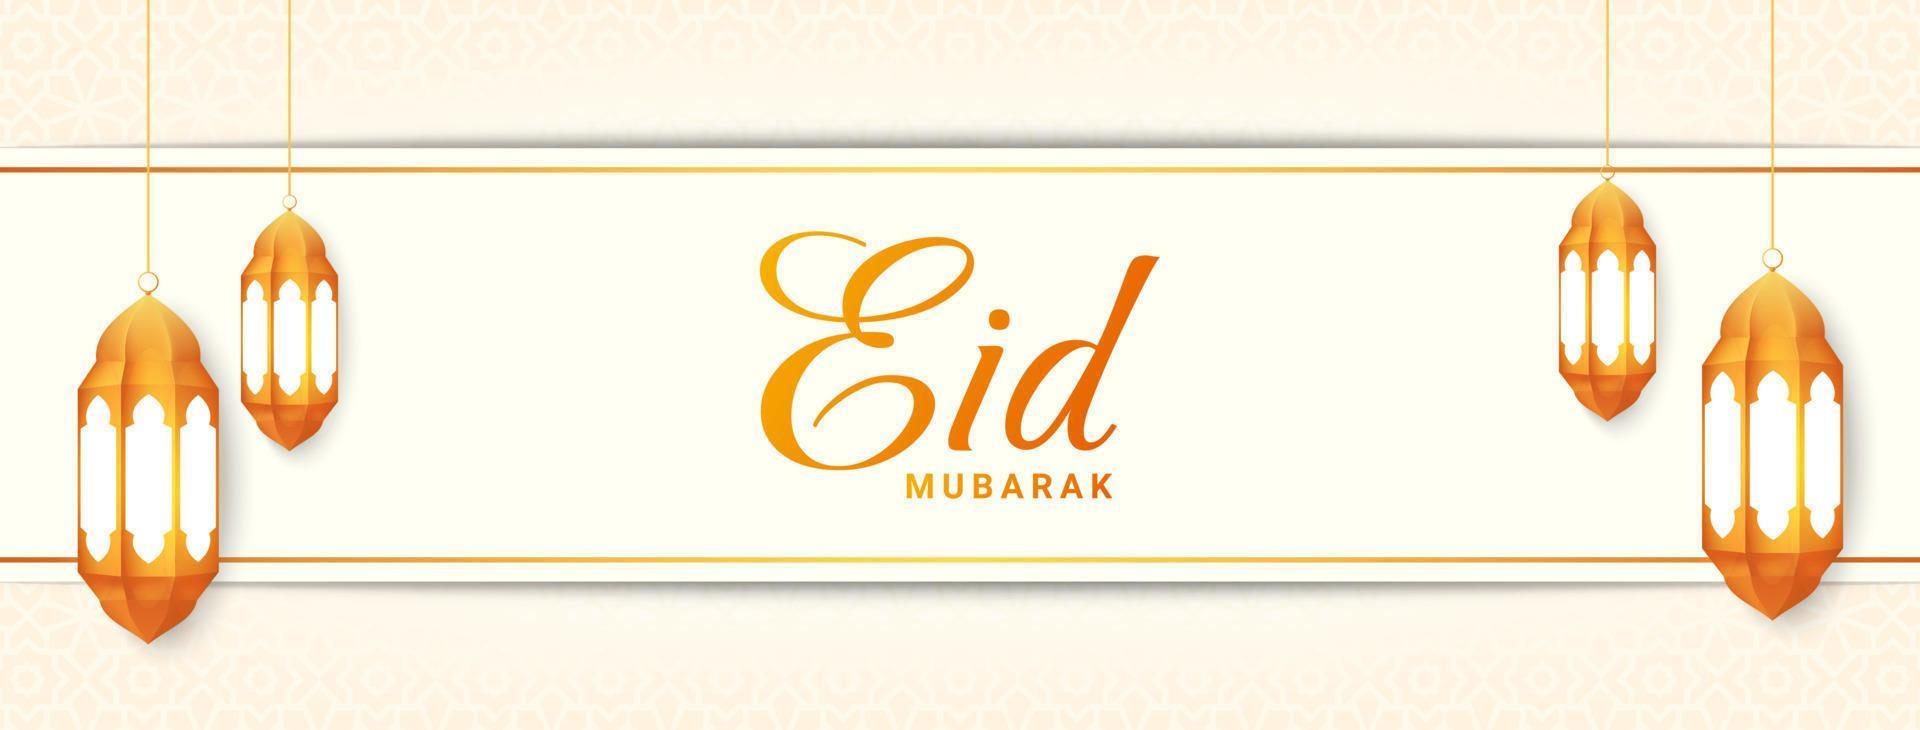 Eid mubarak islamic banner design. White luxury eid mubarak background with pattern border frame and lantern ornament. Vector illustration